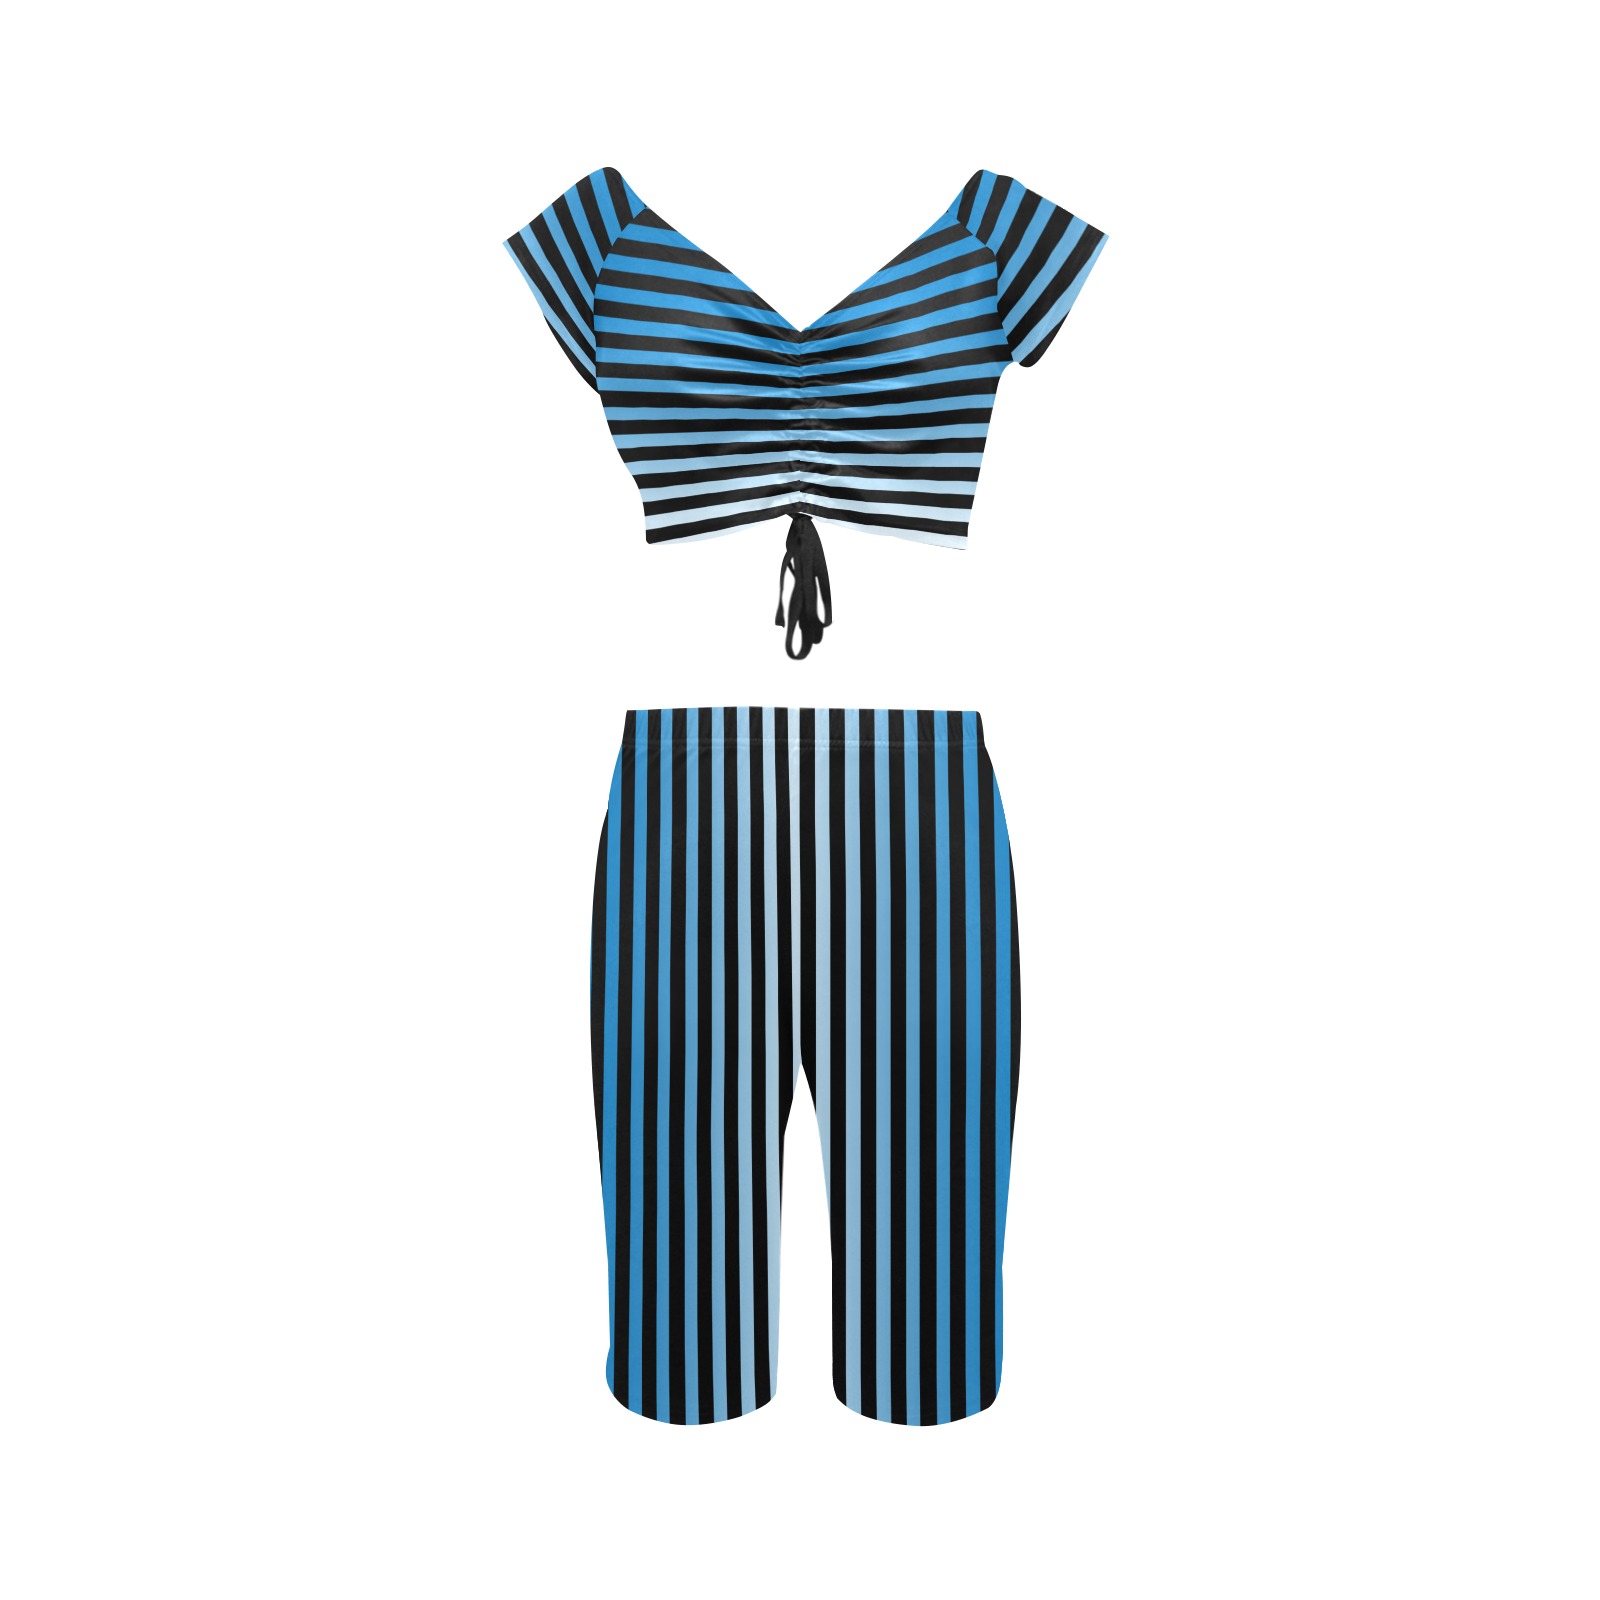 Stripes Fade Blue, Black Women's Crop Top Yoga Set